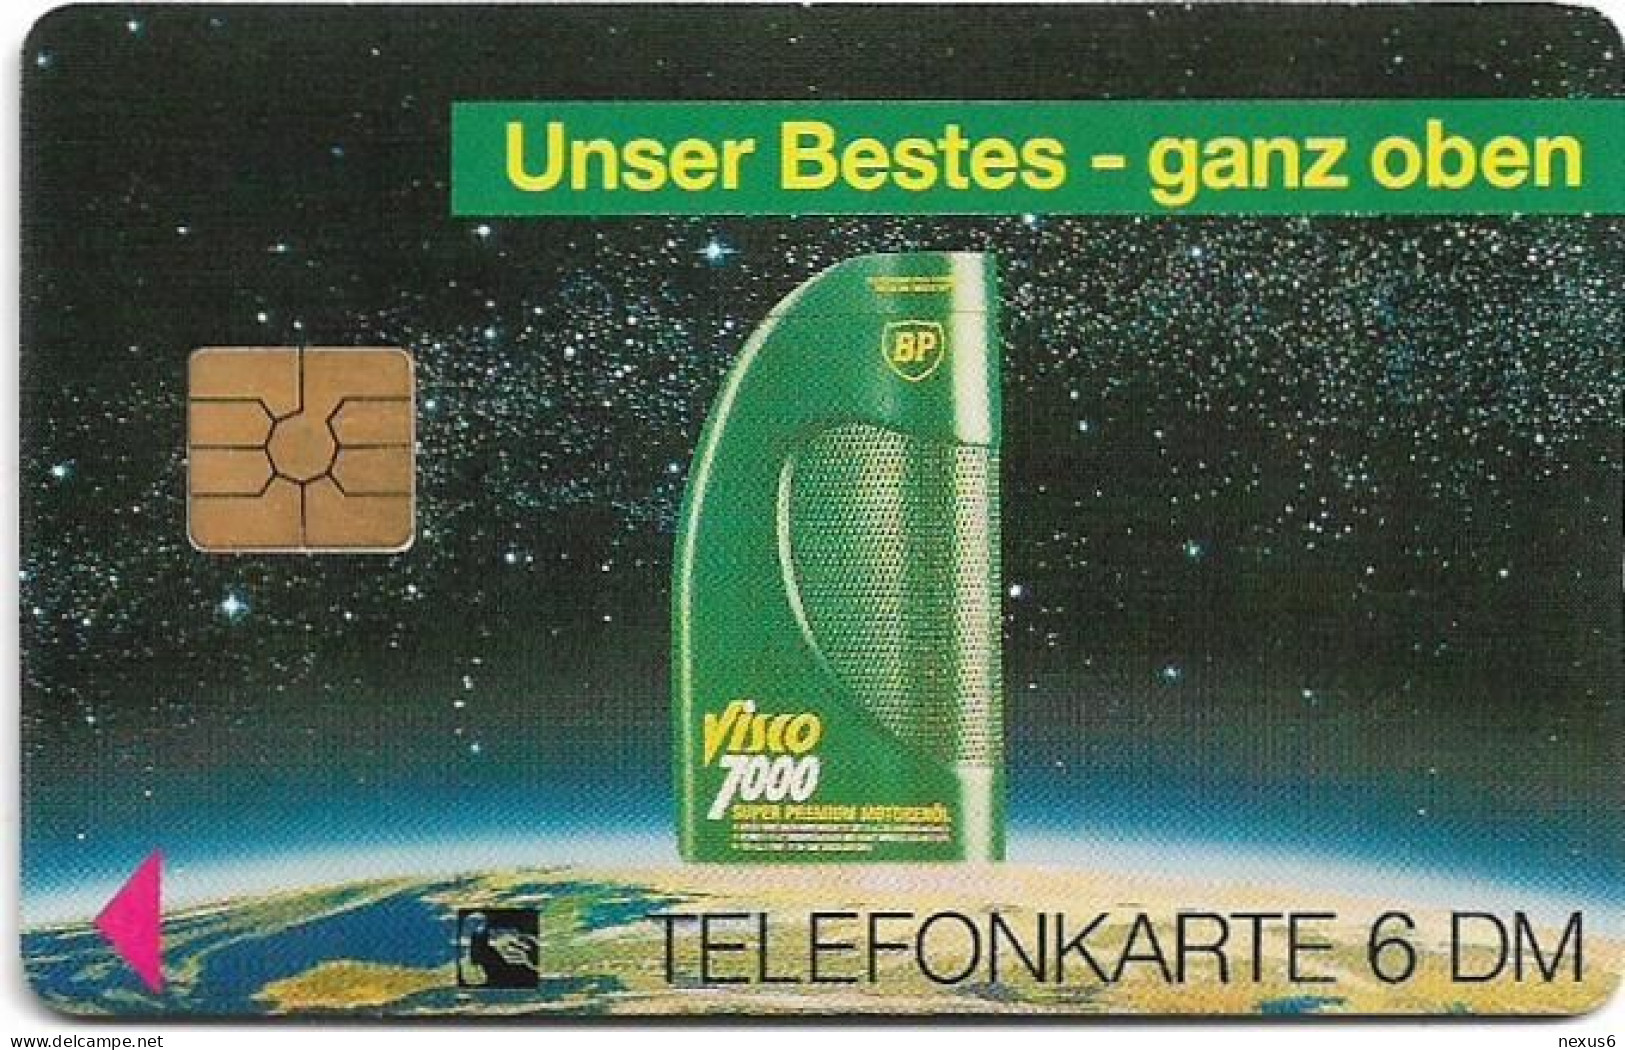 Germany - BP 6 - Hin & Weg - O 1105 - 09.1996, 6DM, 30.000ex, Used - O-Series: Kundenserie Vom Sammlerservice Ausgeschlossen